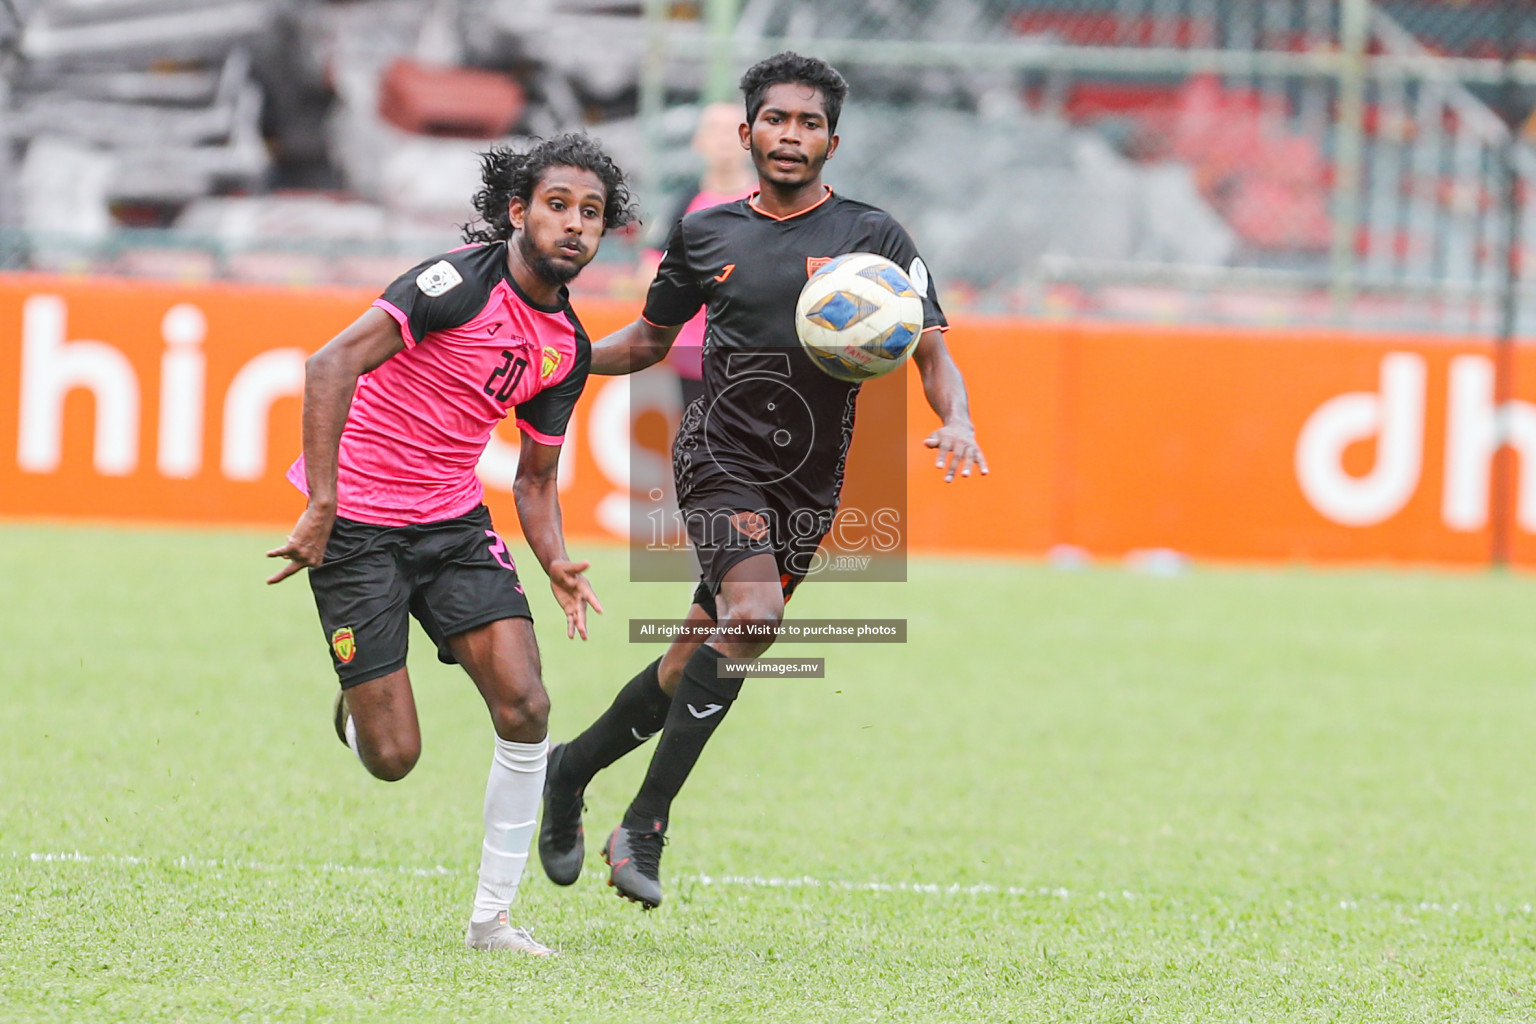 Club Eagles vs United Victory in Dhiraagu Dhivehi Premier League 2020-21 on 09 January 2021 held in Male', Maldives